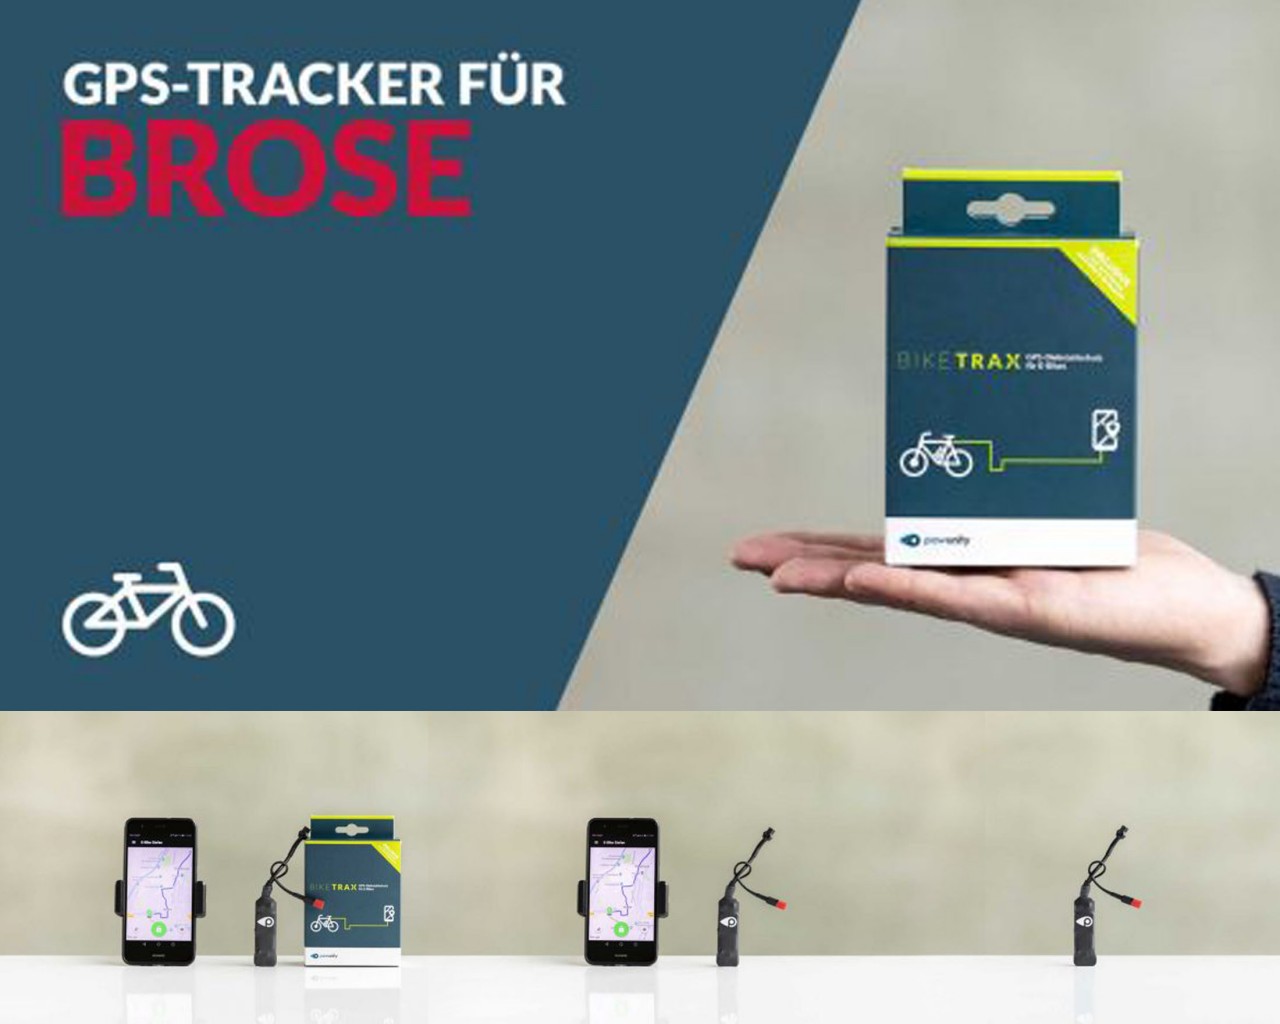 PowUnity BikeTrax GPS Tracker for E-Bikes - Brose